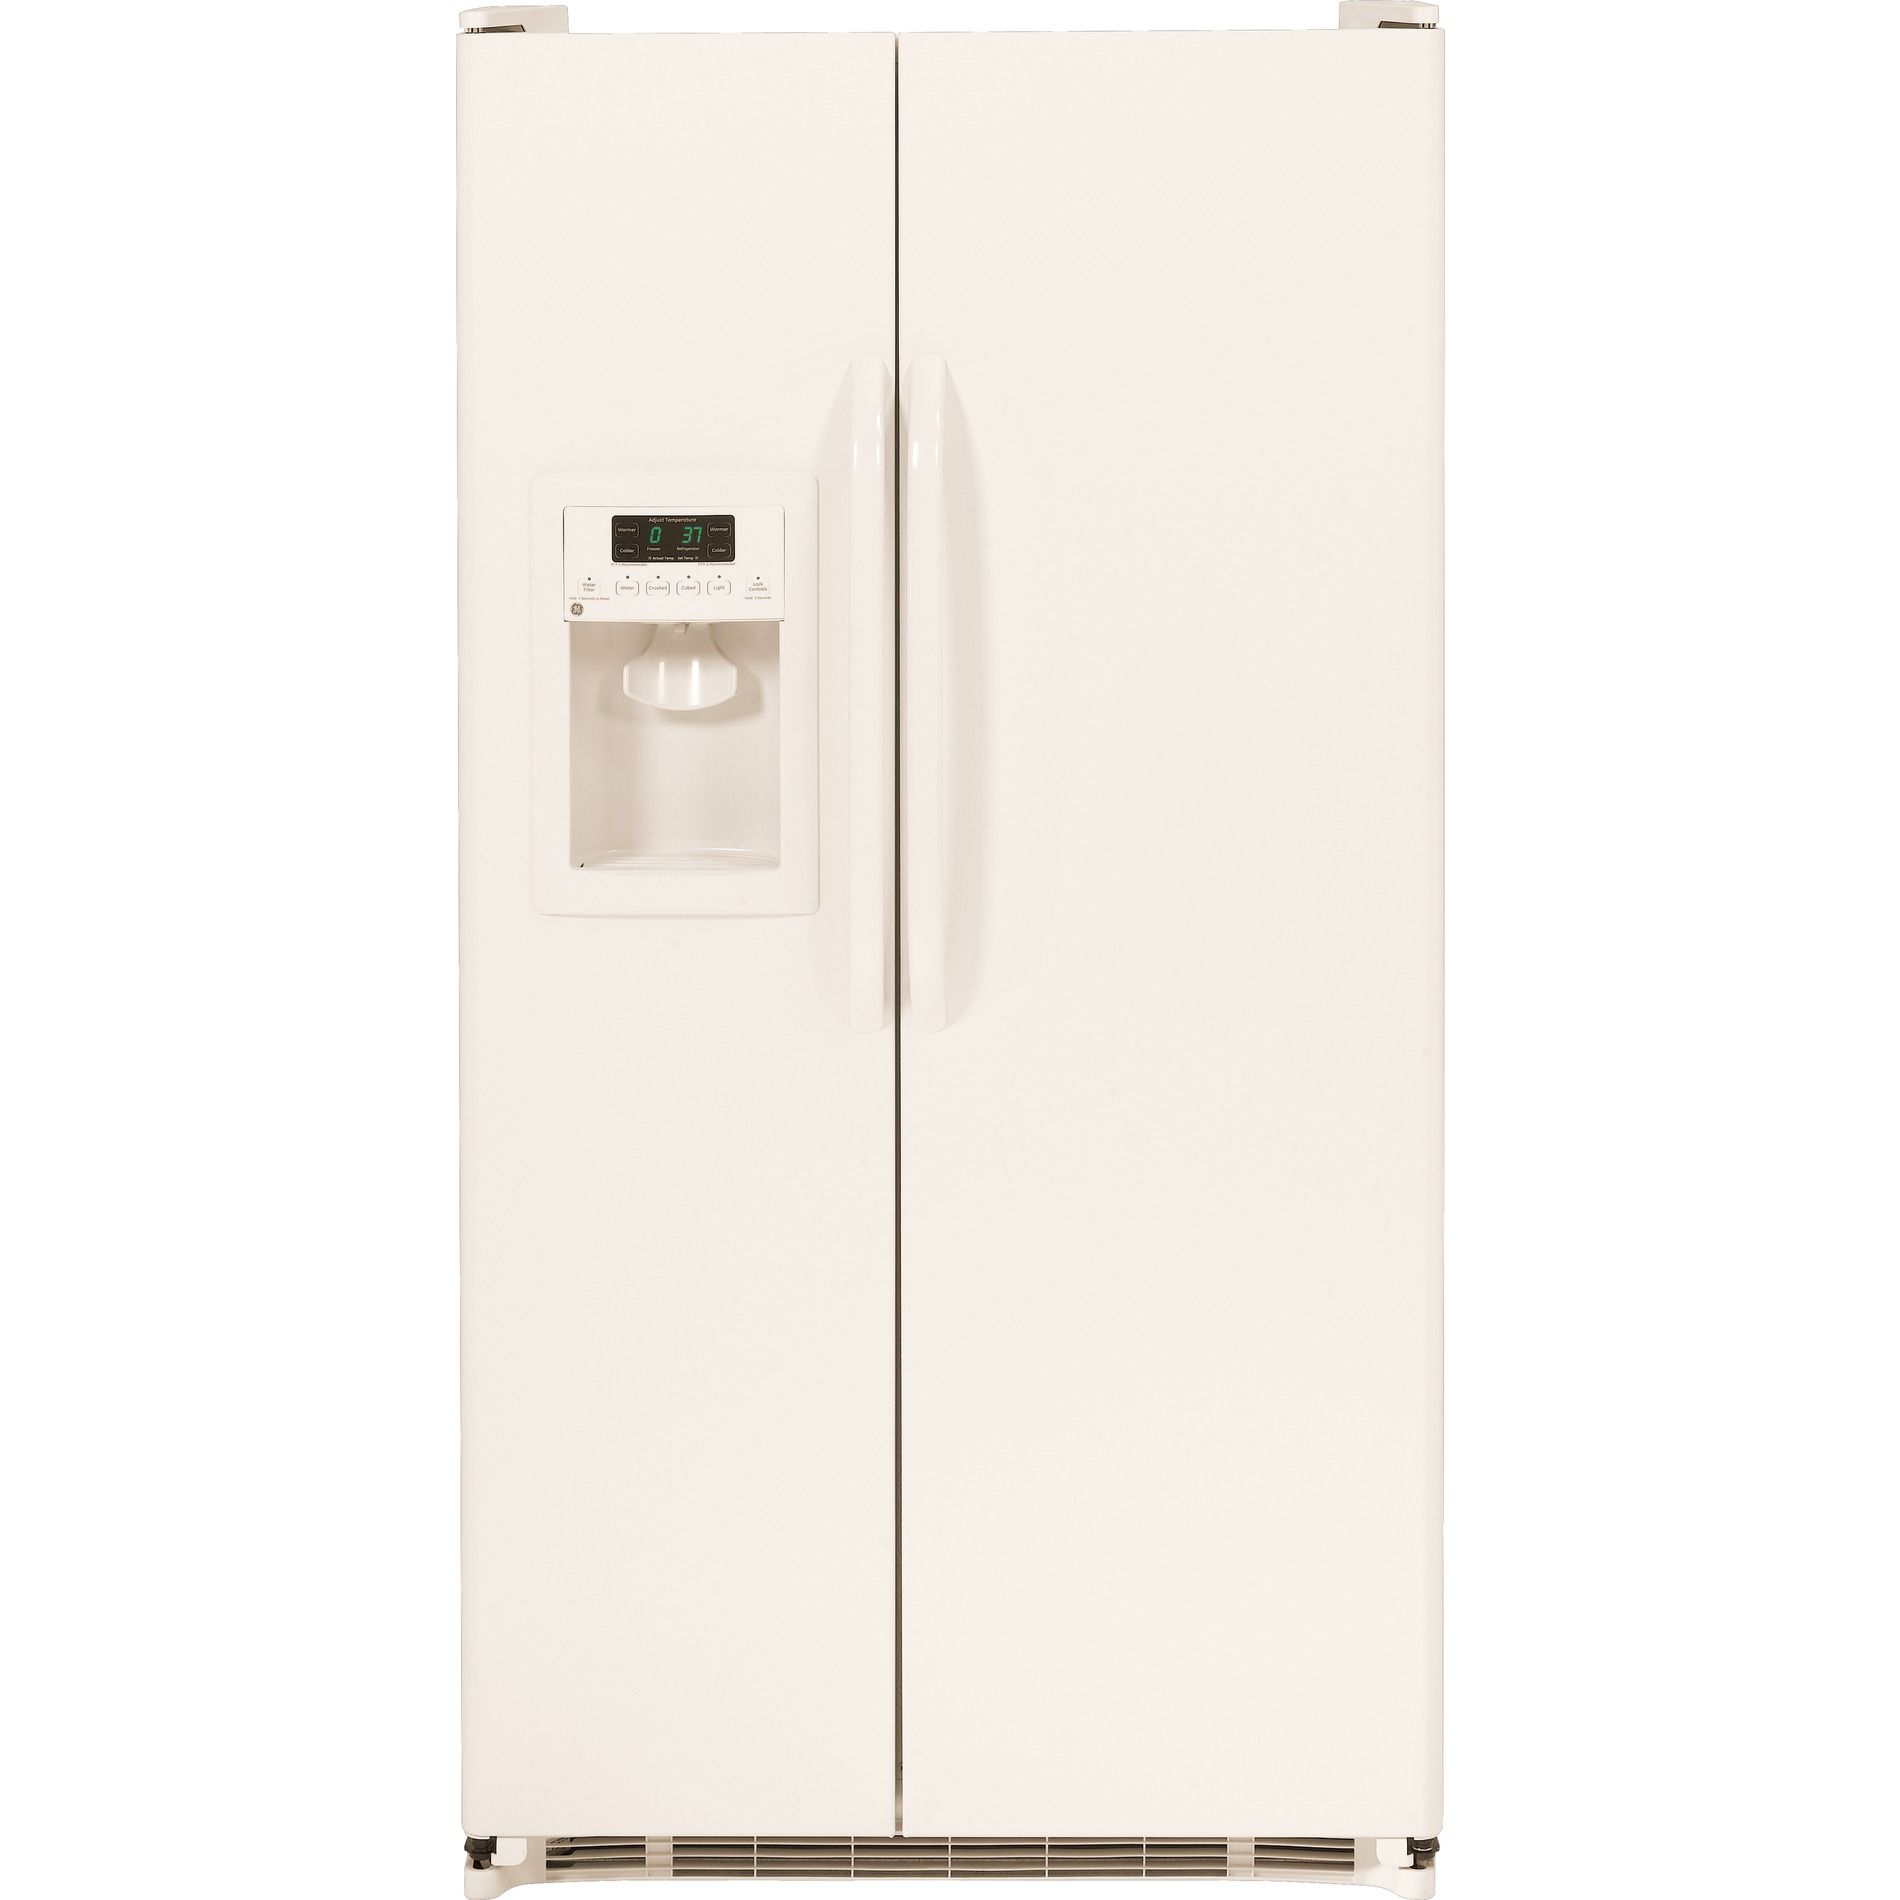 Refrigerator - C Series logo